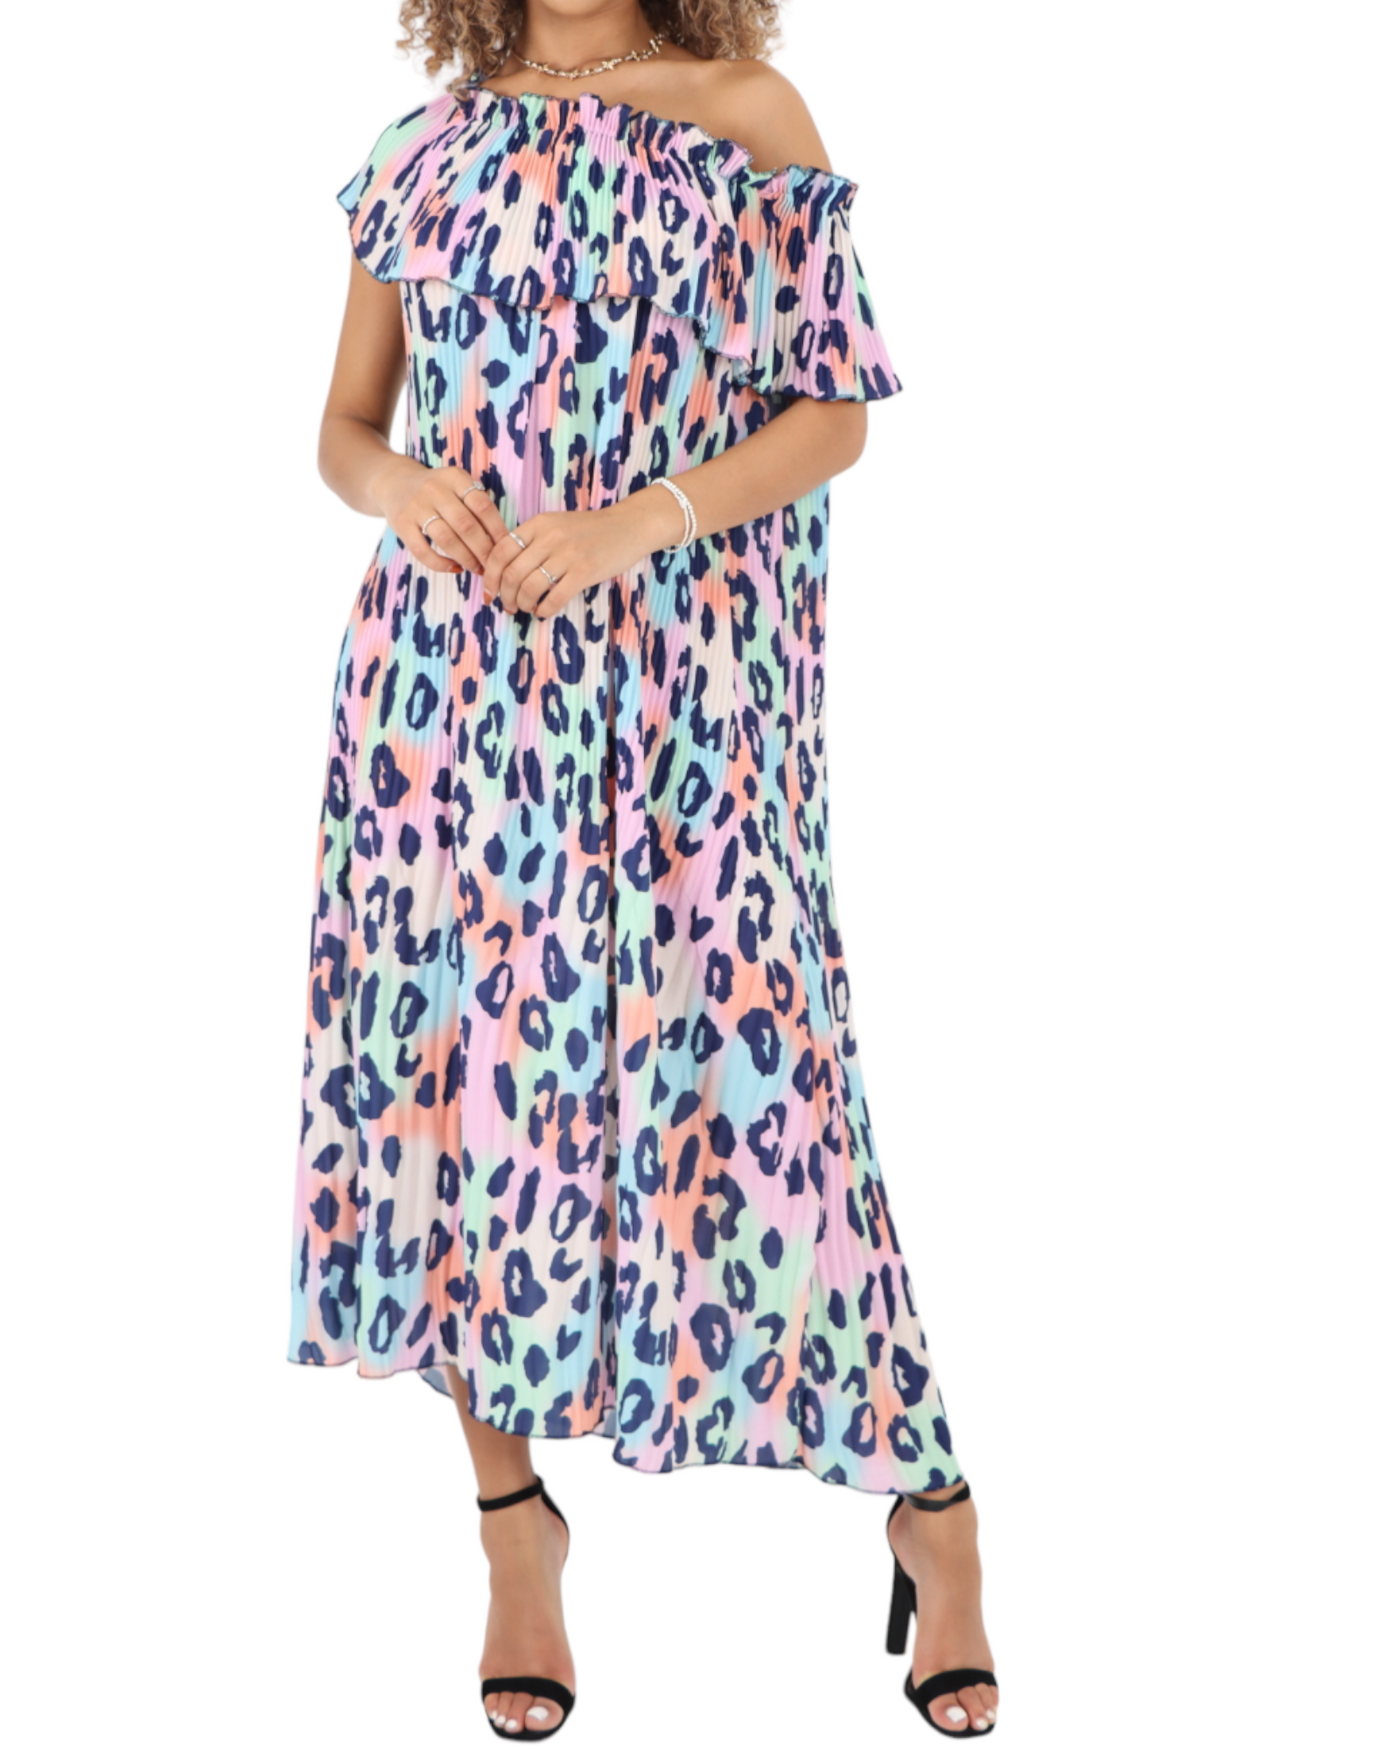 Printed Pleated Frill Bardot Midaxi Dress